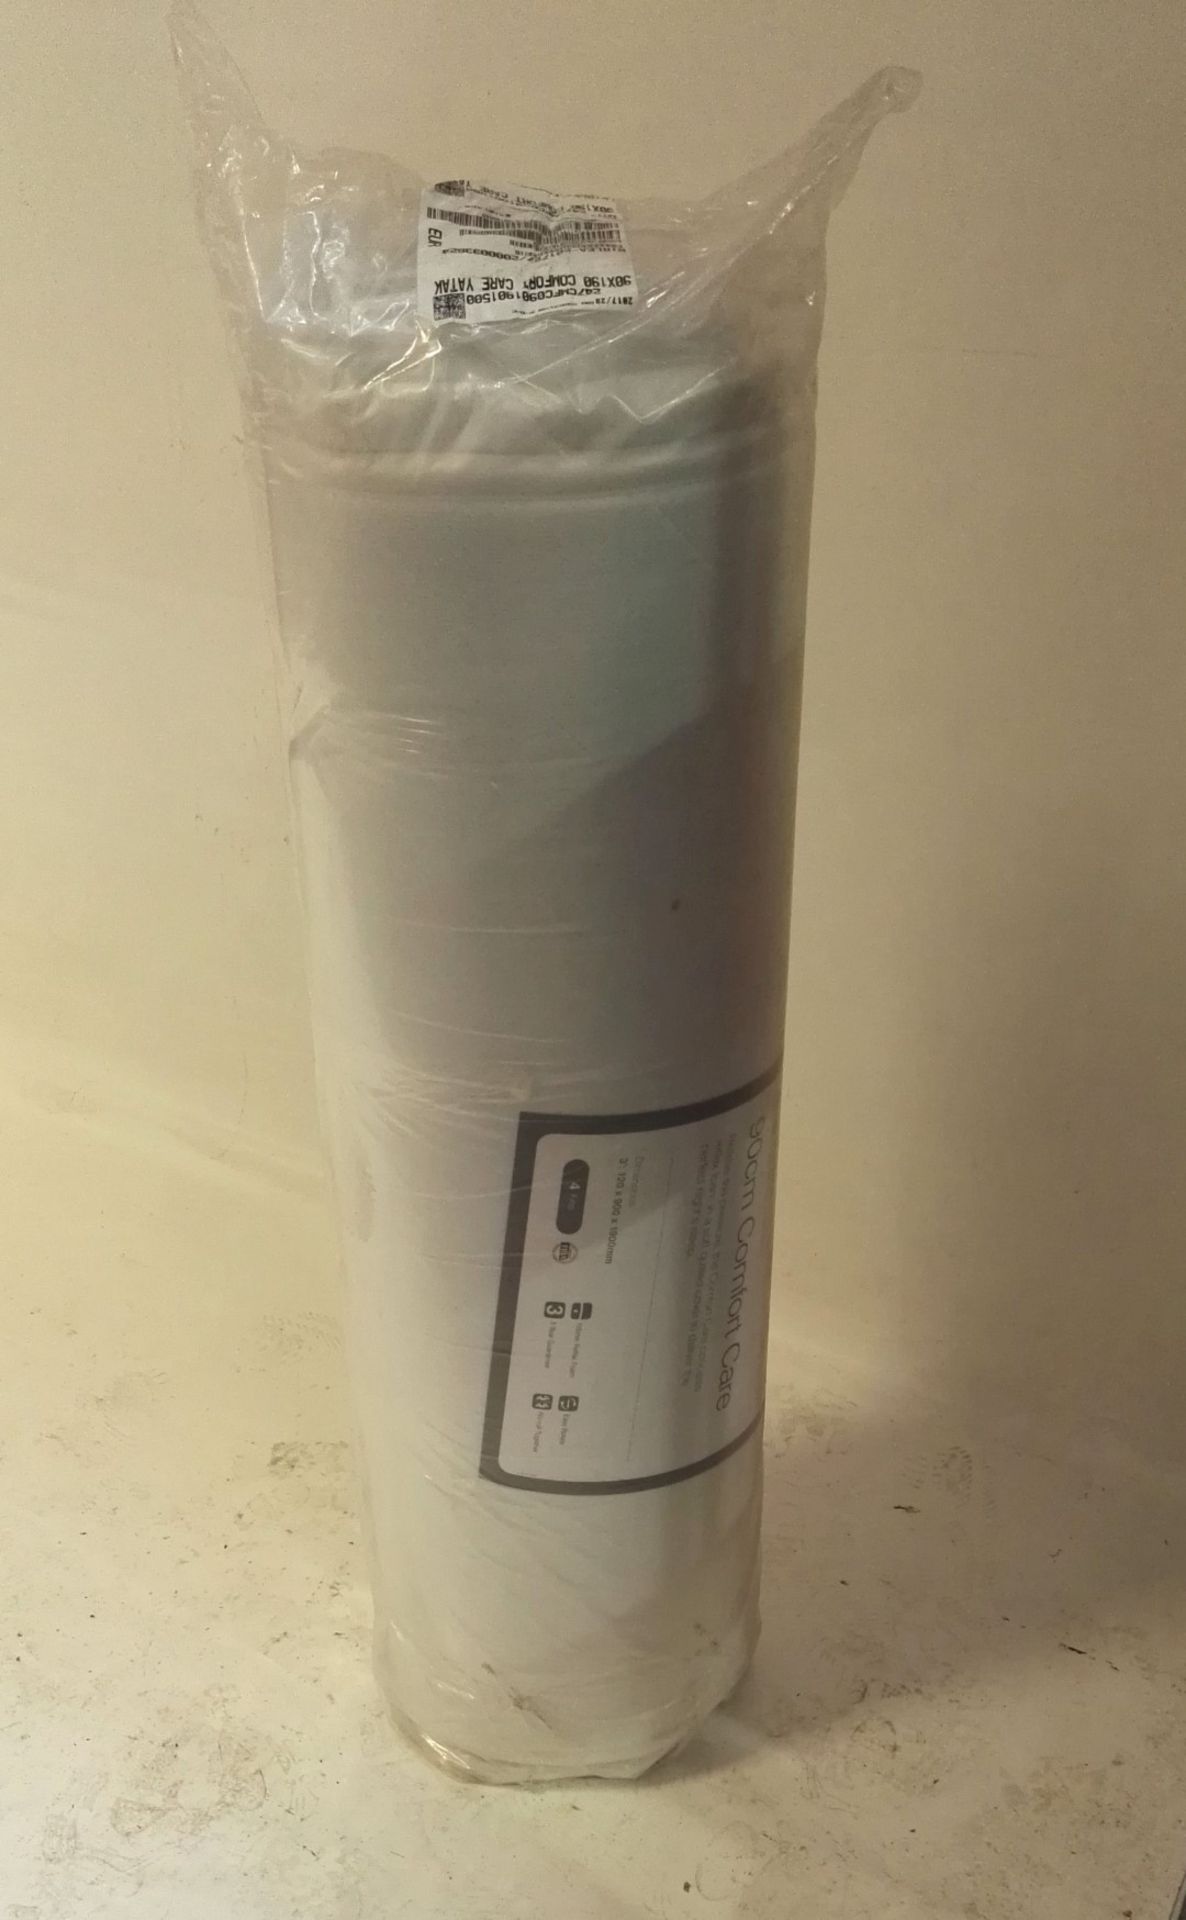 1 x Birlea 90cm Comfort Care Firm Rolled Up Reflex Foam Mattress - Brand New Stock - CL286 - - Image 5 of 5